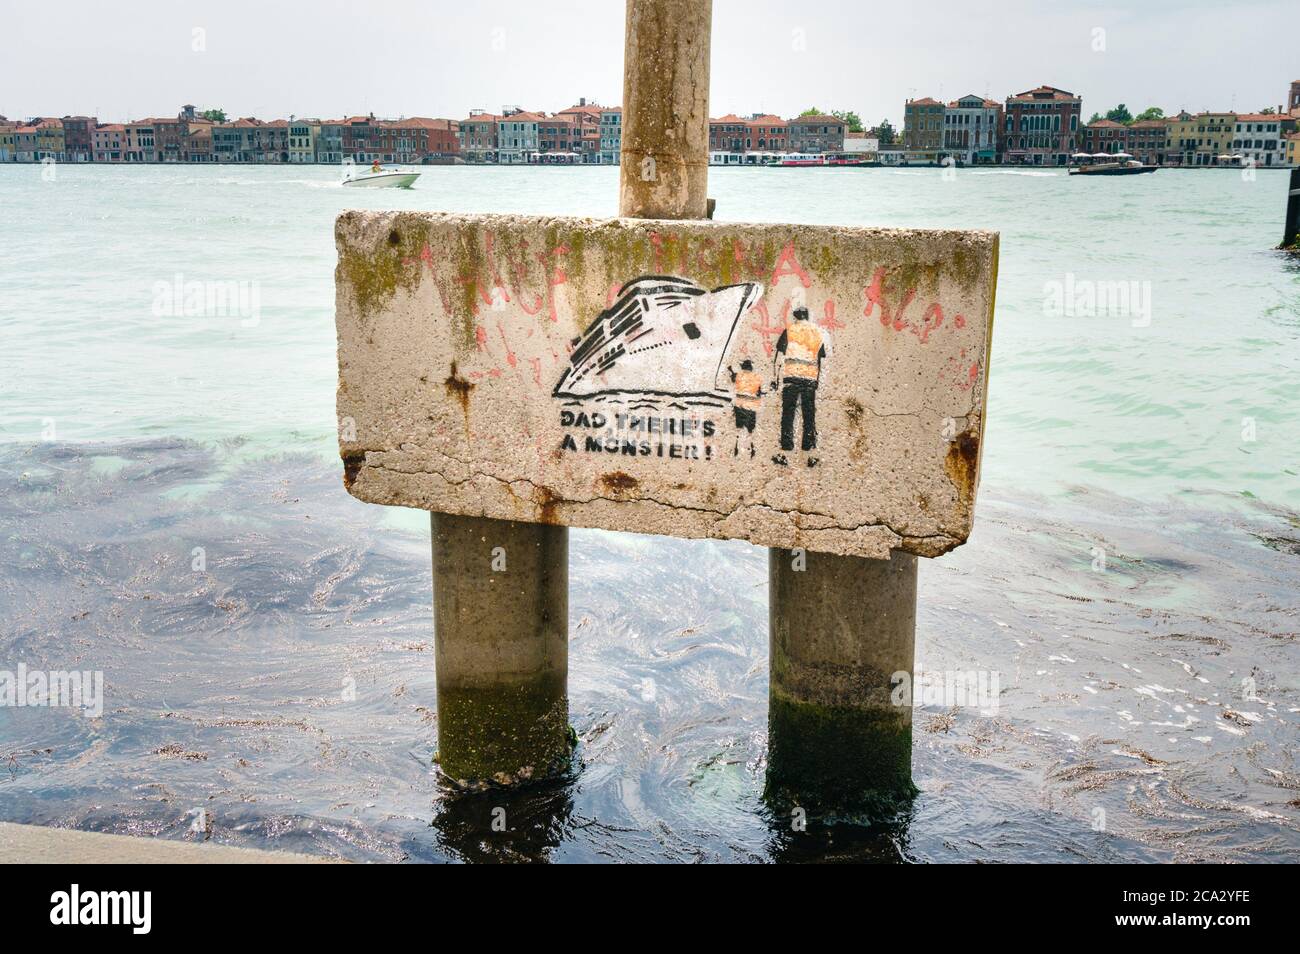 Venice, Italy - May 28th 2018. Graffiti artwork denouncing mass tourism, impact environmental destruction, citizen everyday life, hustle, economy. Stock Photo